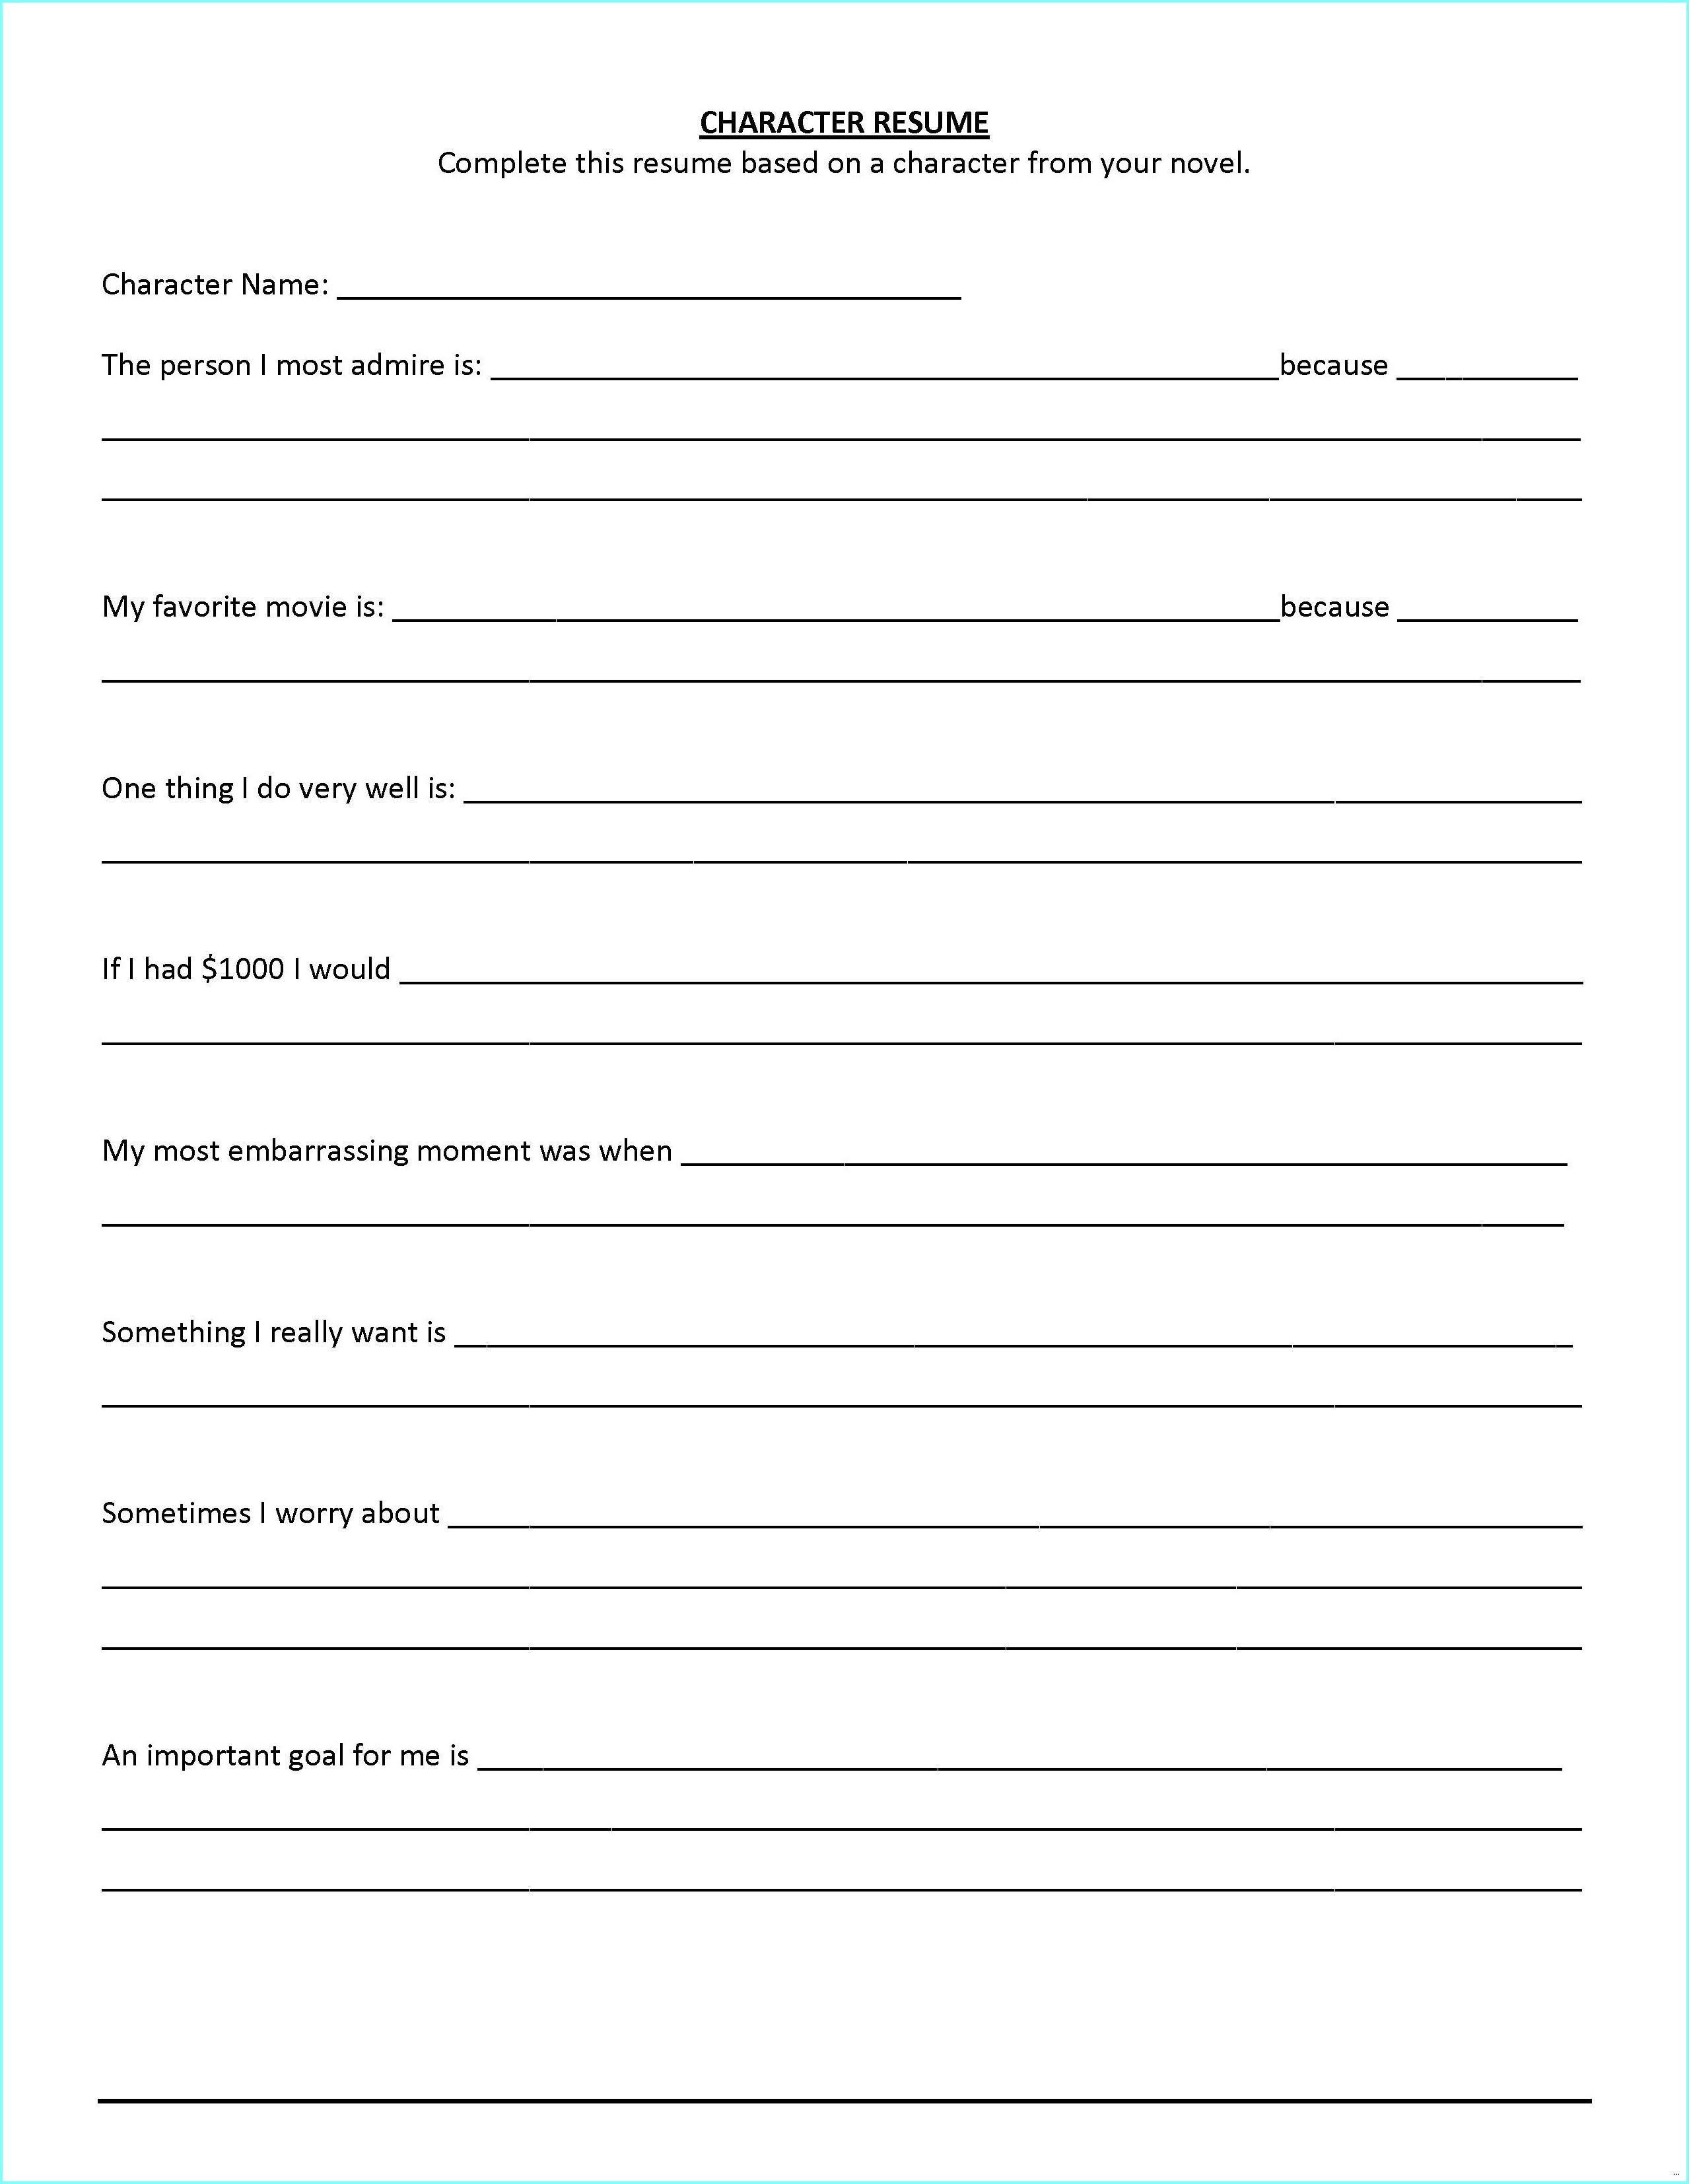 Free Printable Blank Resume Forms - Resume : Resume Examples #l5Wypkk3Q2 - Free Blank Resume Forms Printable